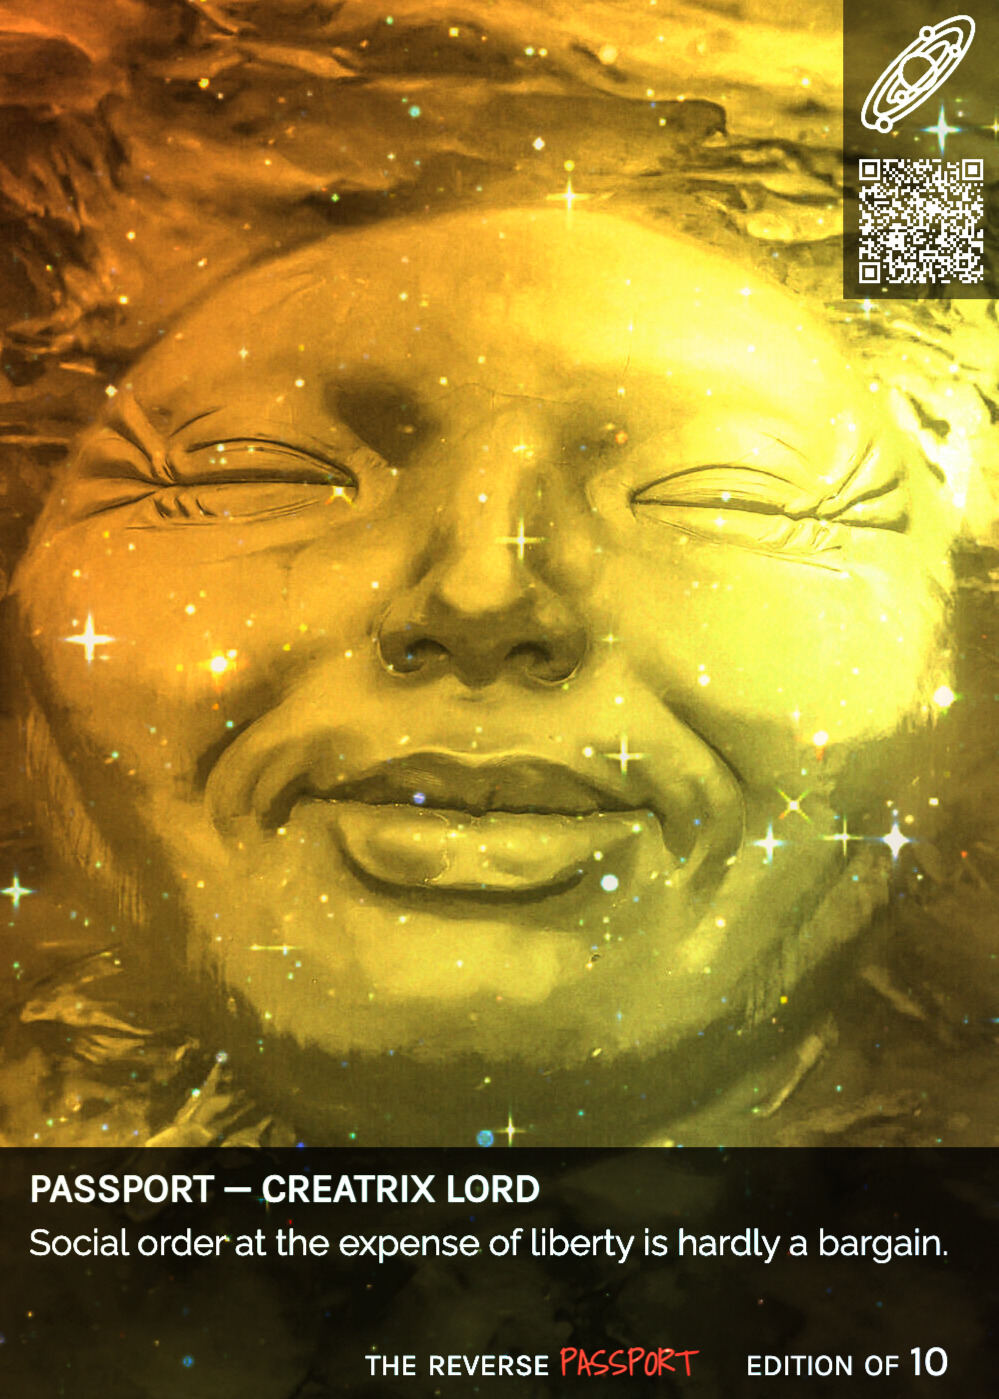 Passport — Creatrix Lord